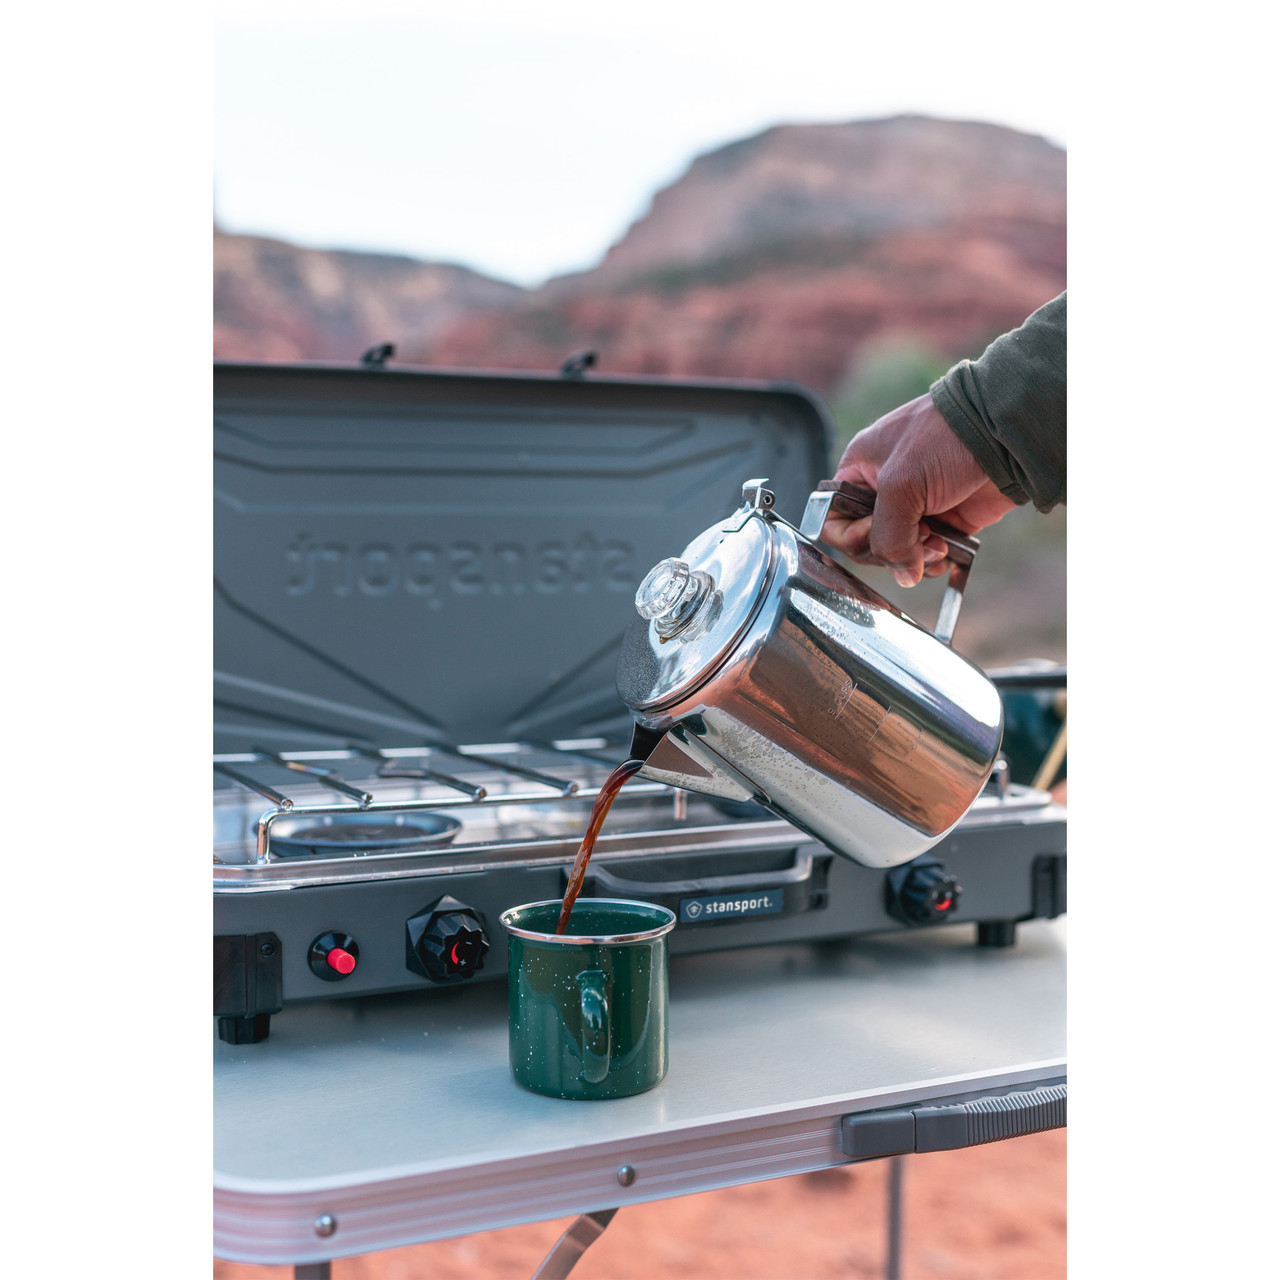 Stansport Enamel Percolator Coffee Pot – 8 Cup 